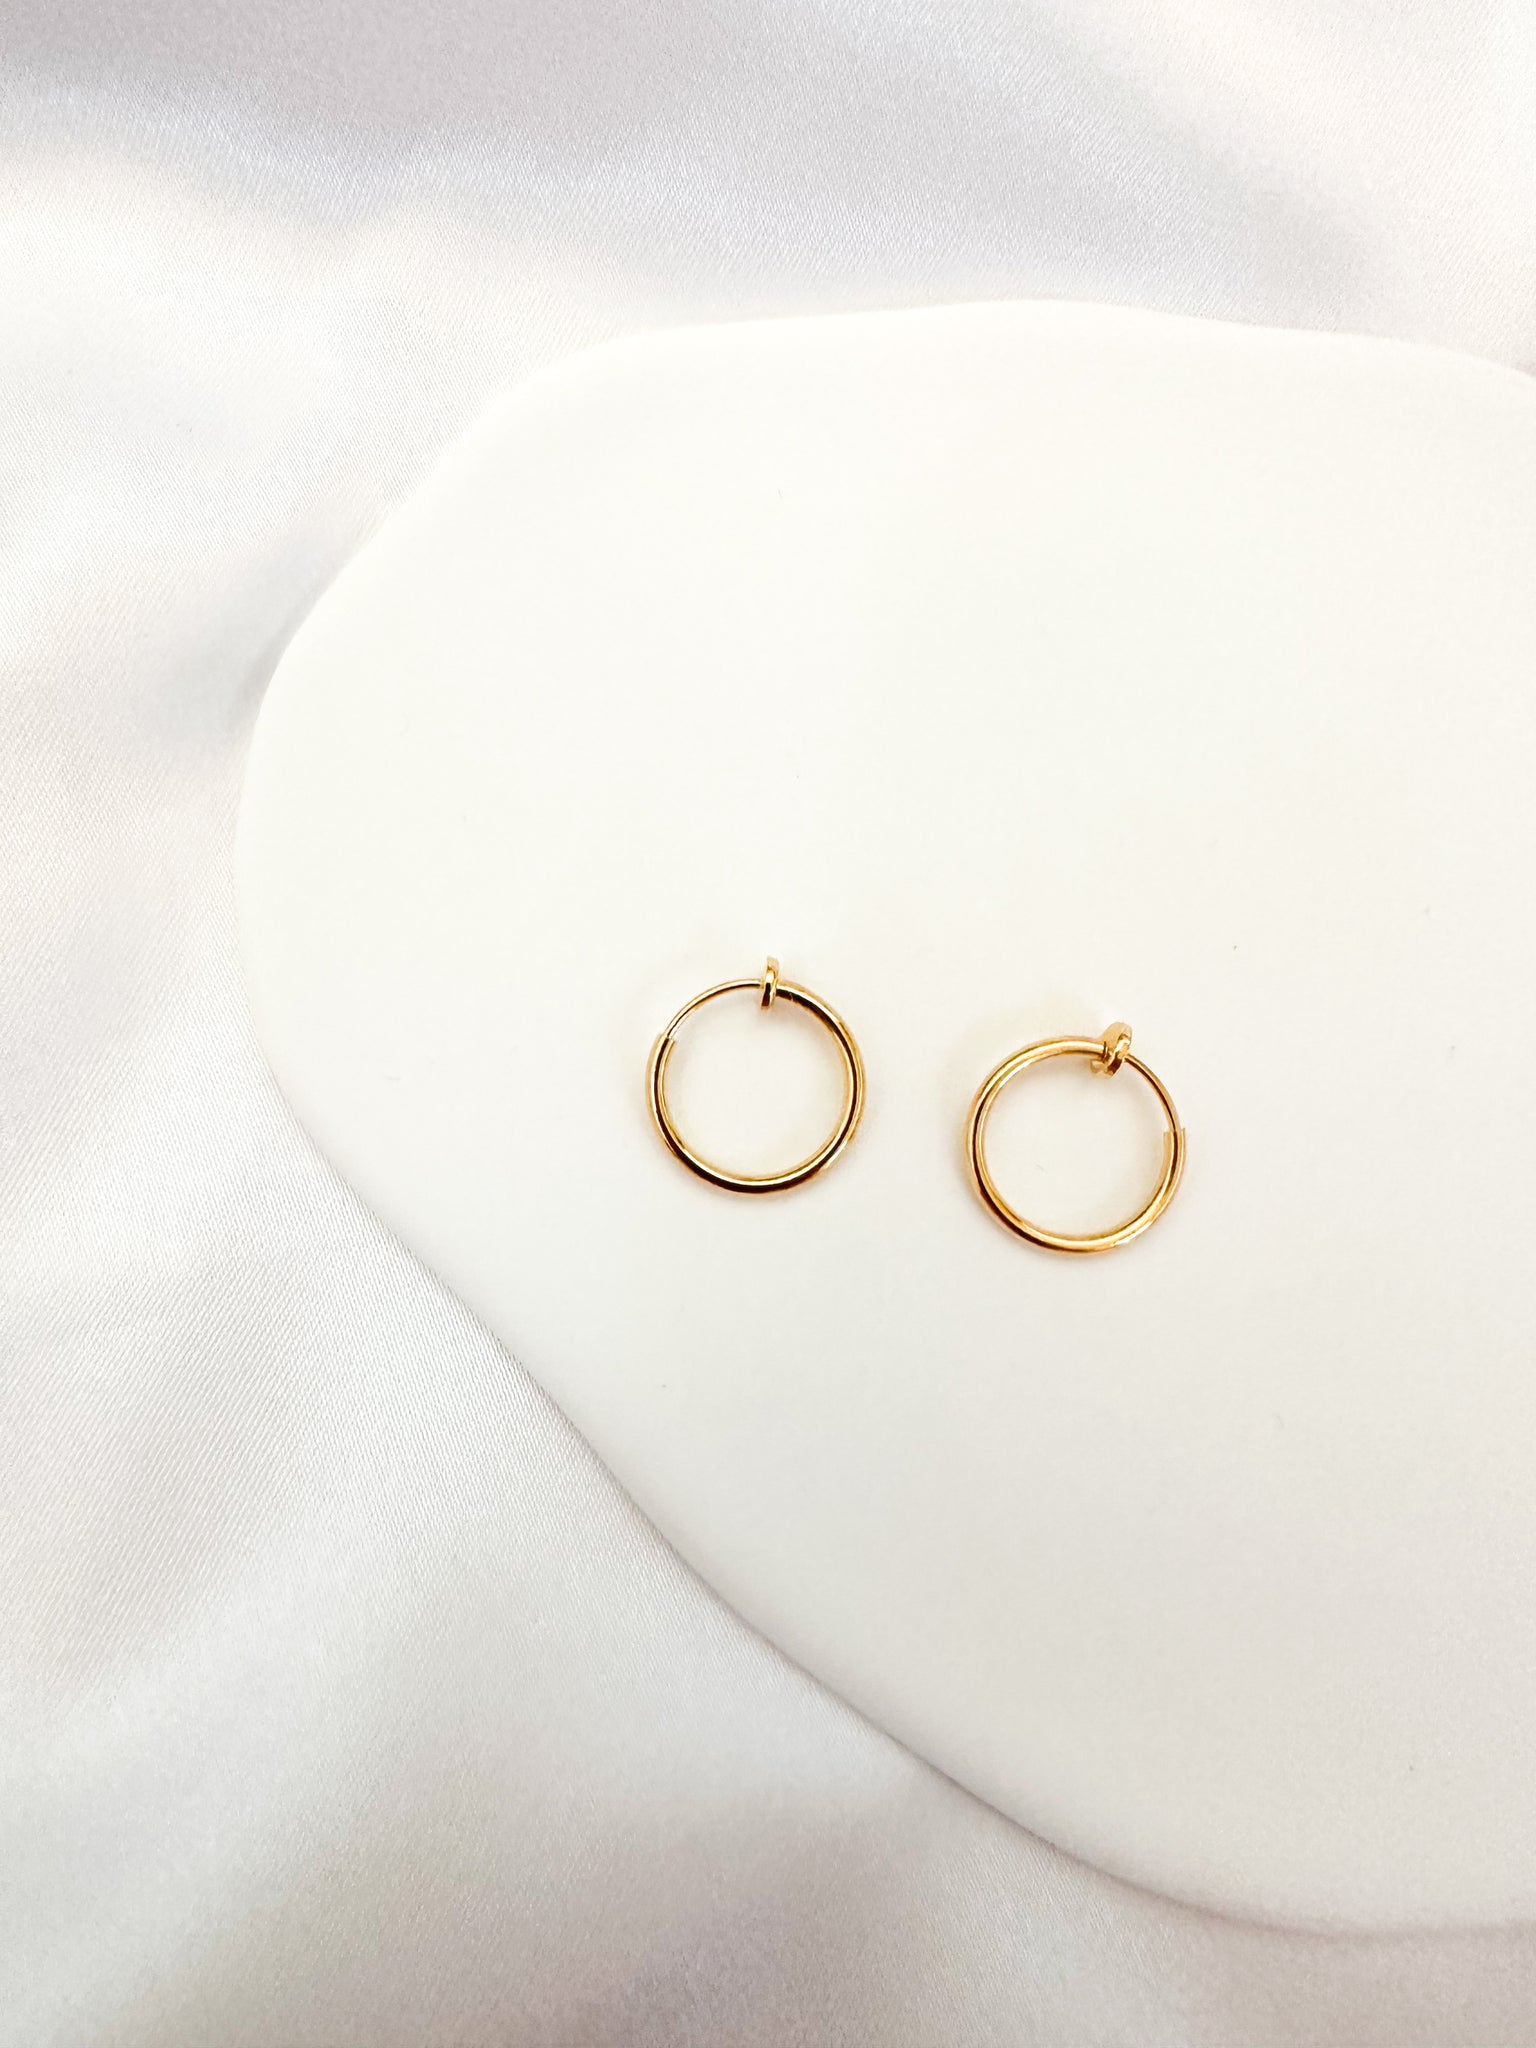 15mm dainty gold clipon hoop earrings